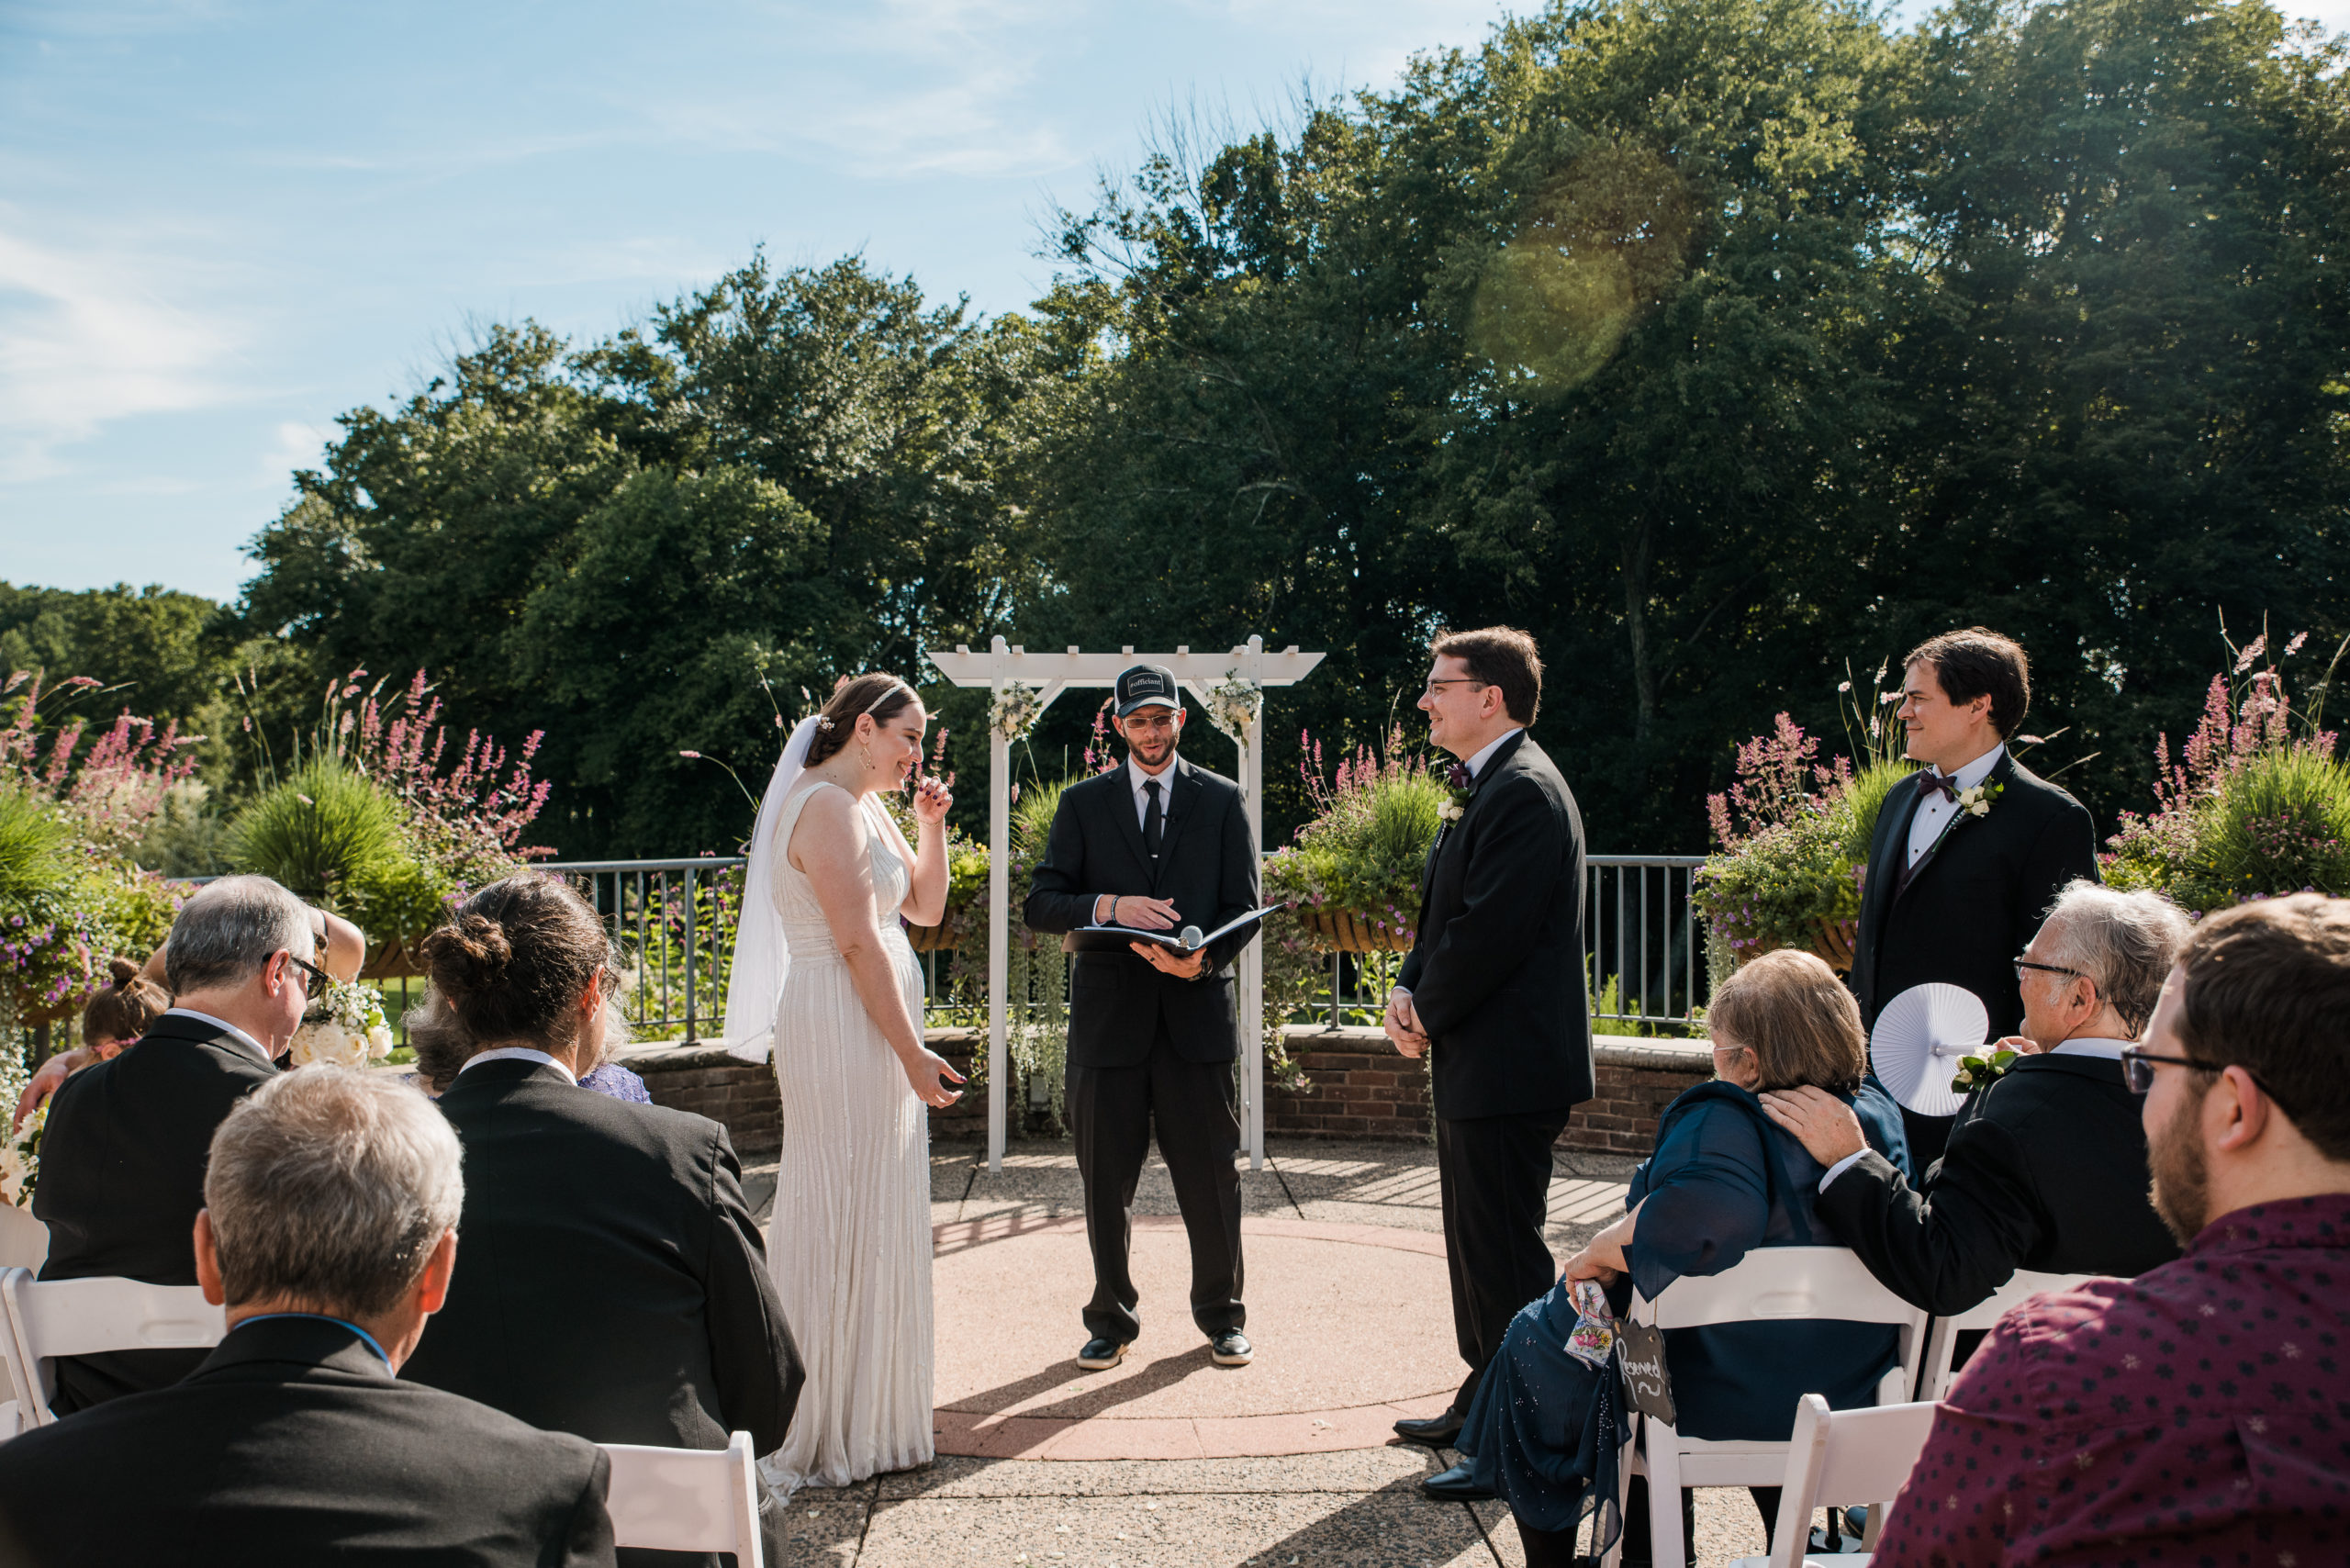 Wedding ceremony at the Atrium at Meadowlark Botanical Gardens